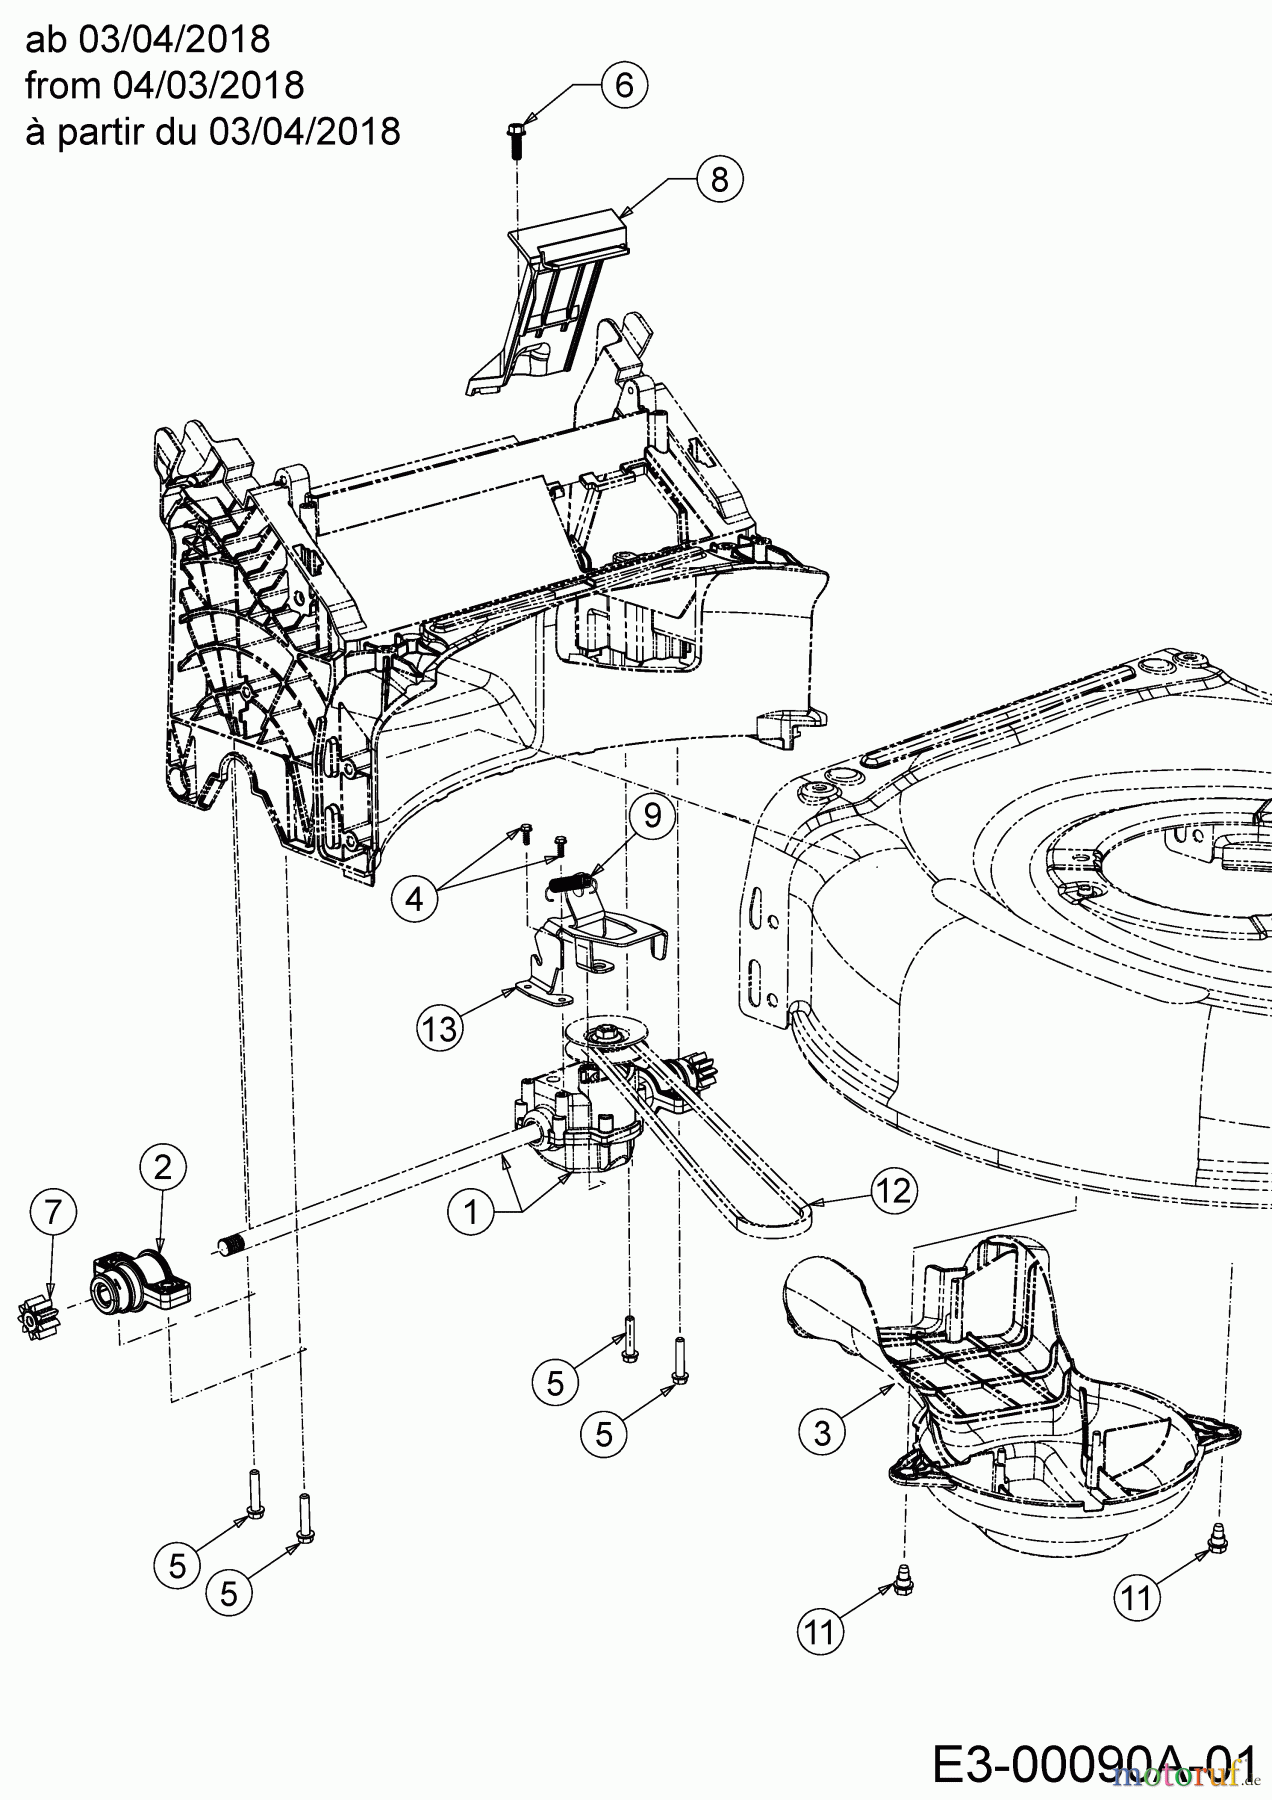  MTD Petrol mower self propelled SP 53 HWB 500 12A-PF5C600  (2020) Gearbox, Belt from 04/03/2018